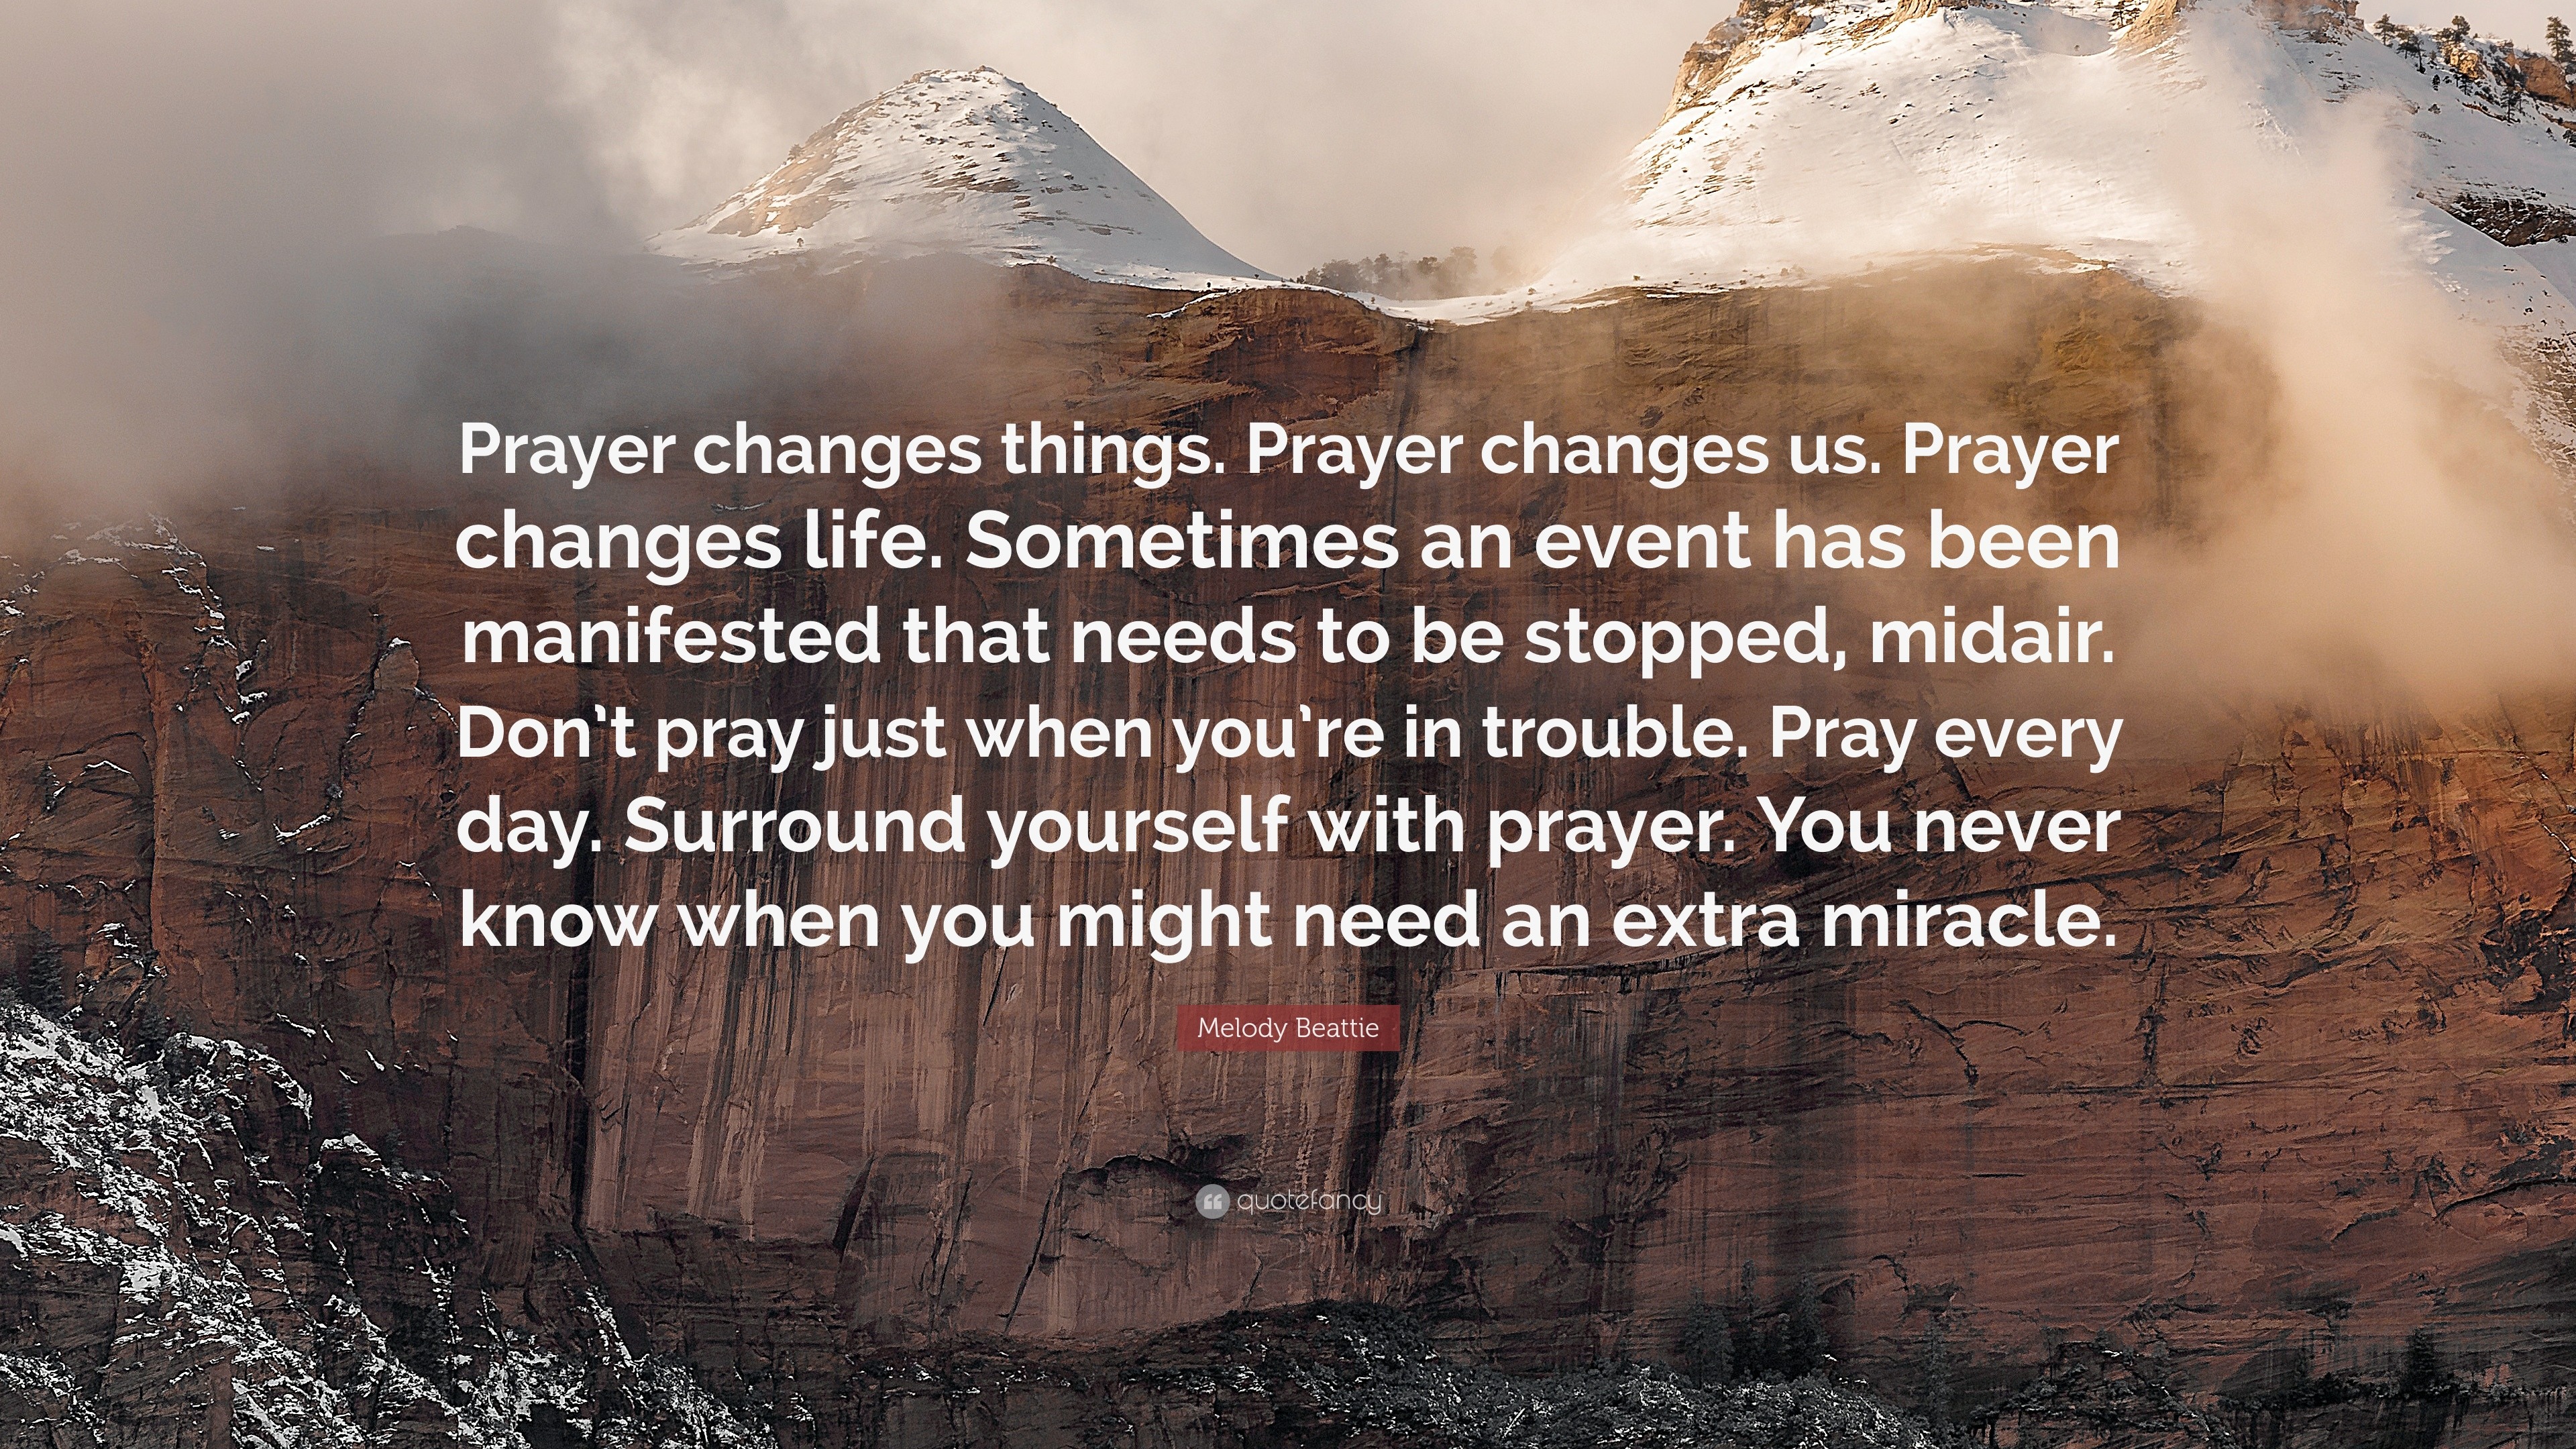 prayer changes things gospel song